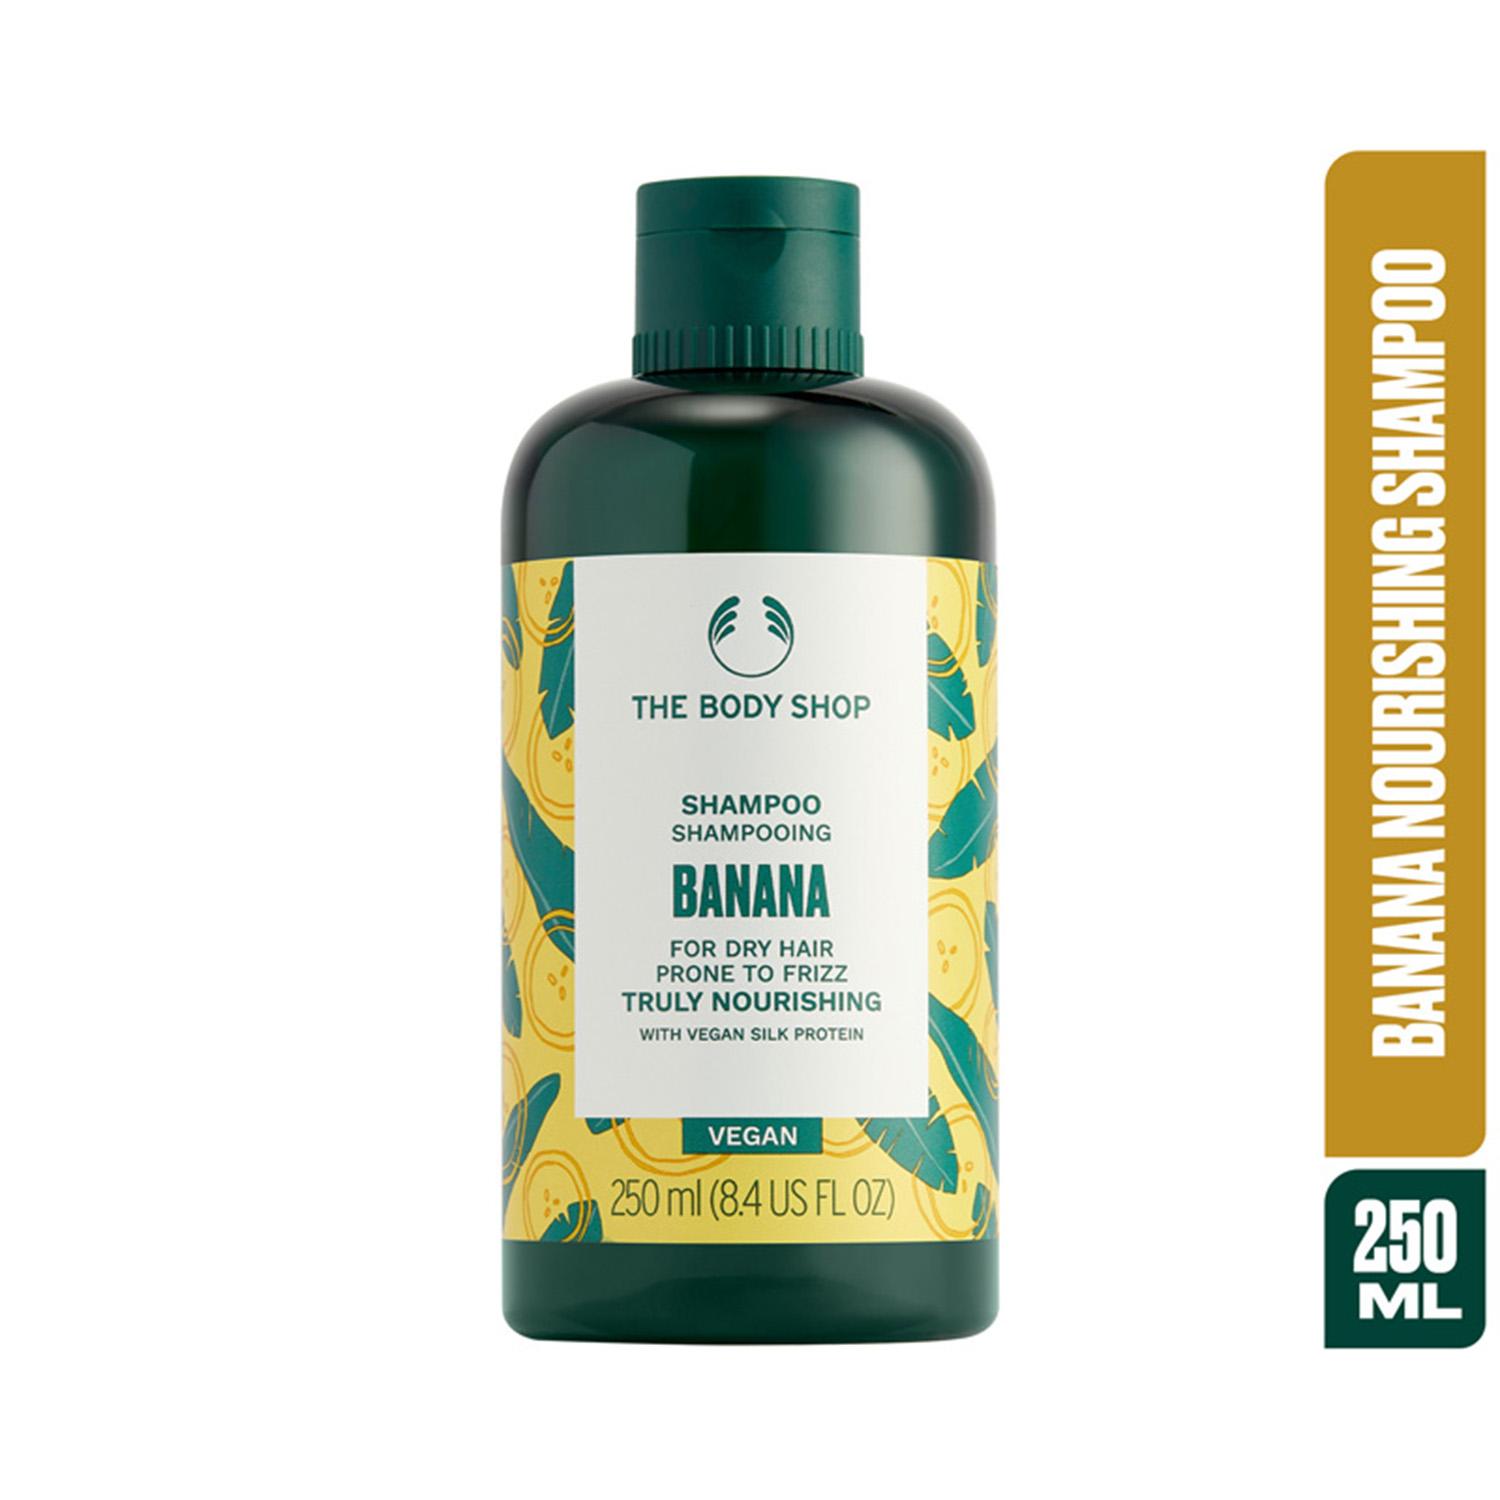 The Body Shop | The Body Shop Banana Shampoo (250ml)